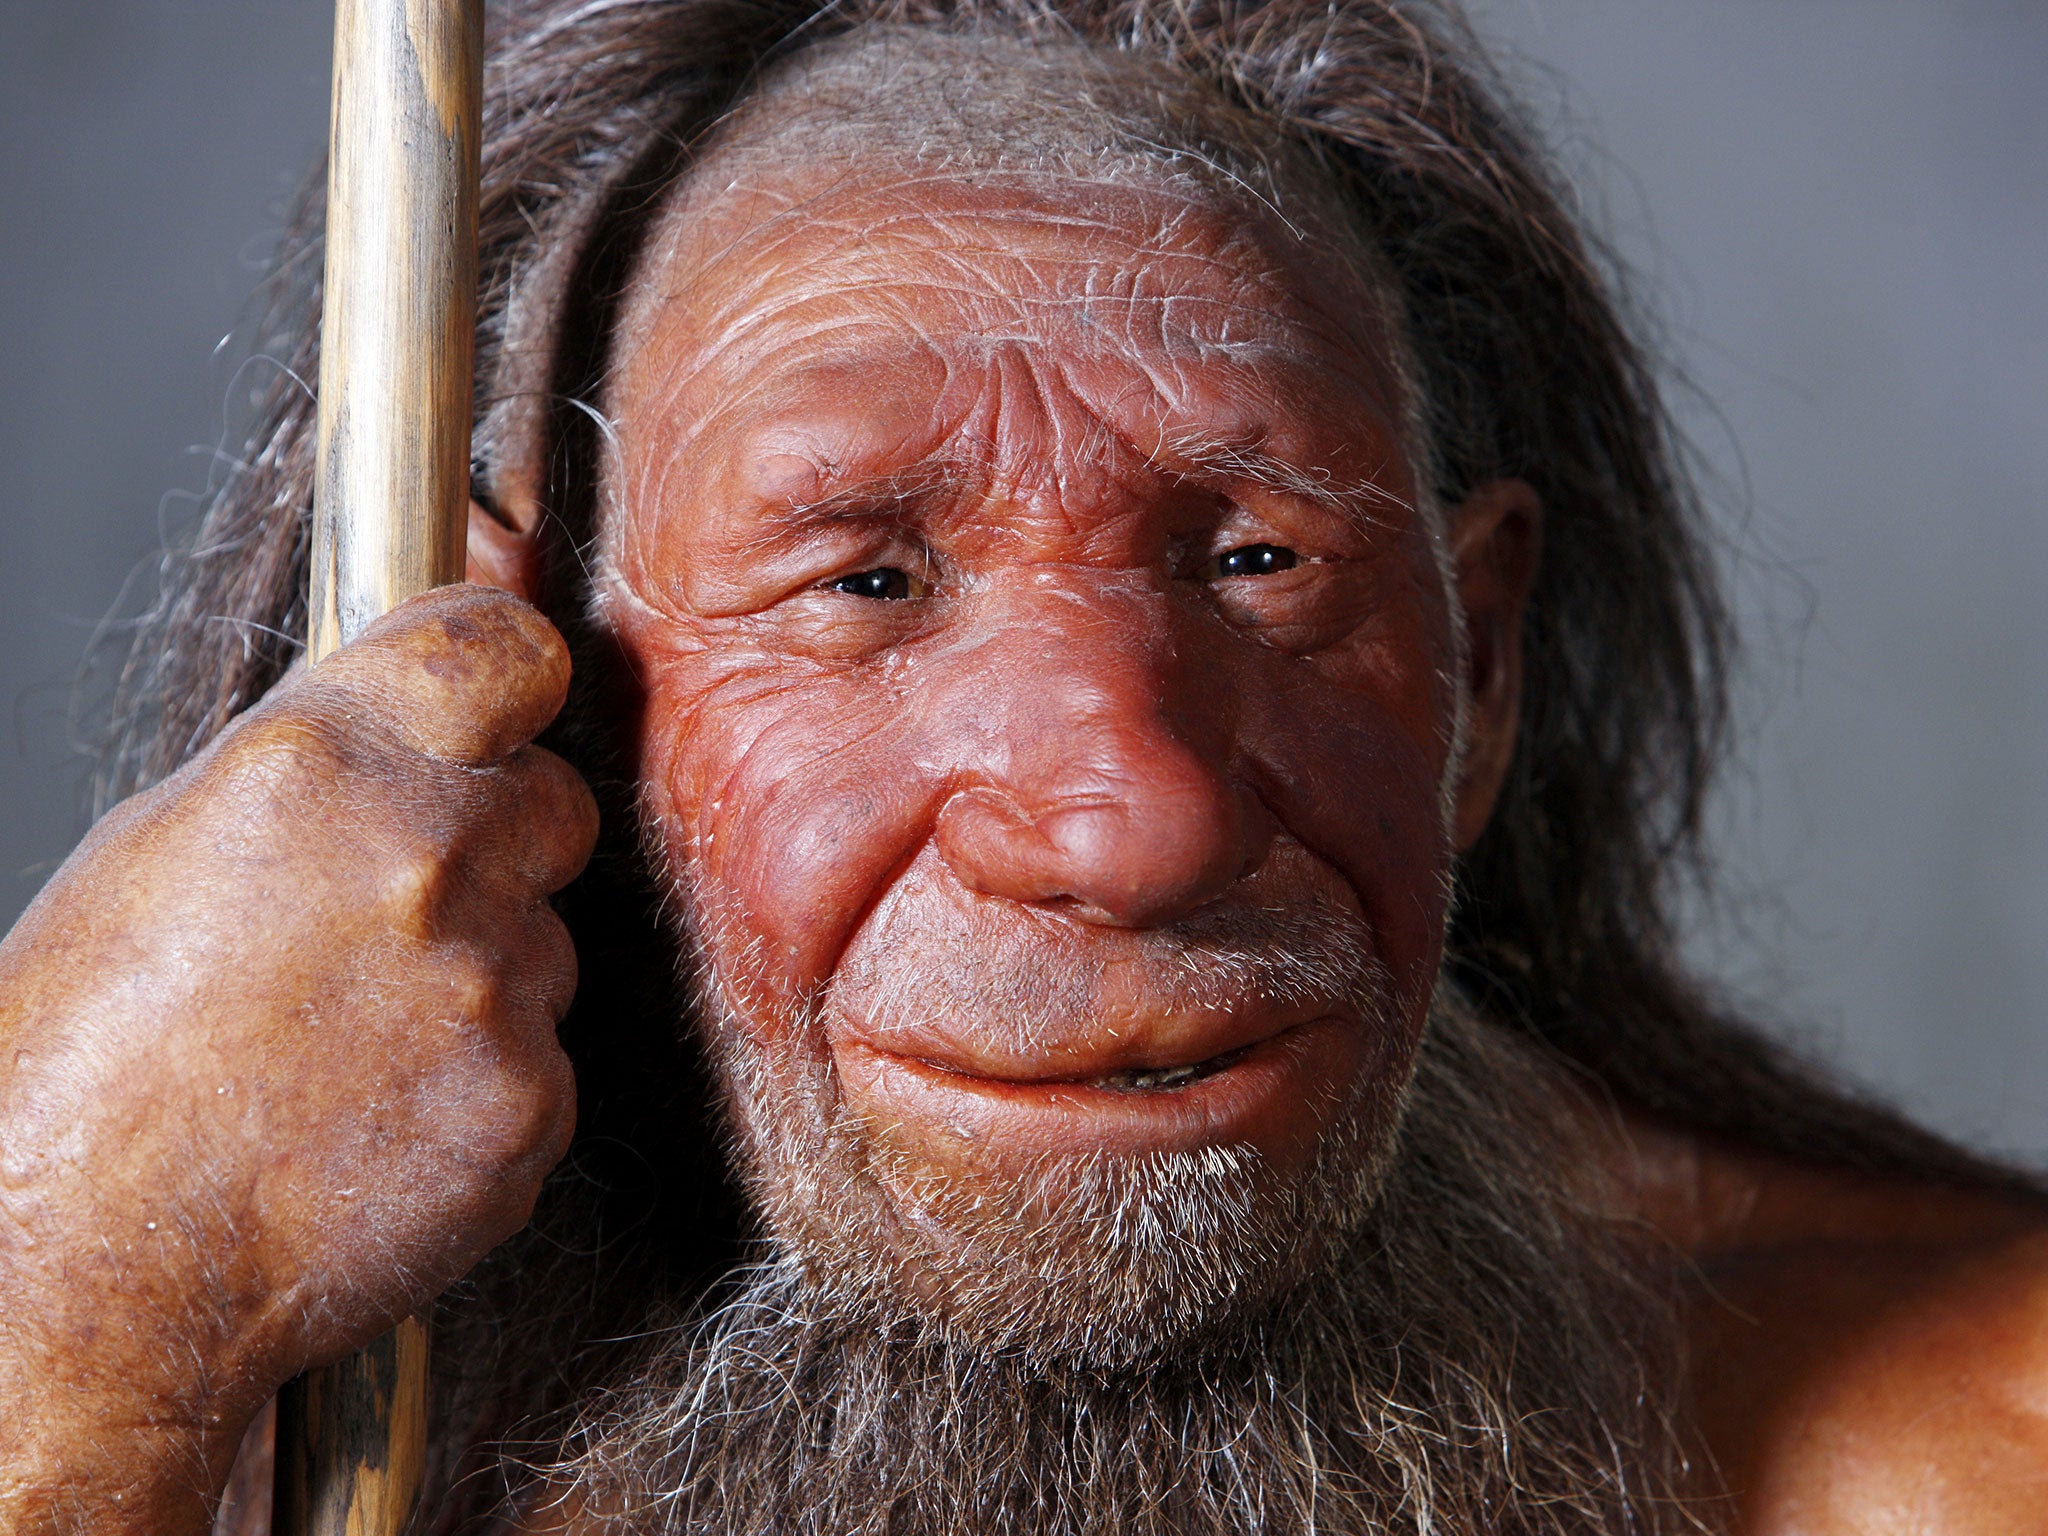 Modern man has inherited medical risk factors from Neanderthals